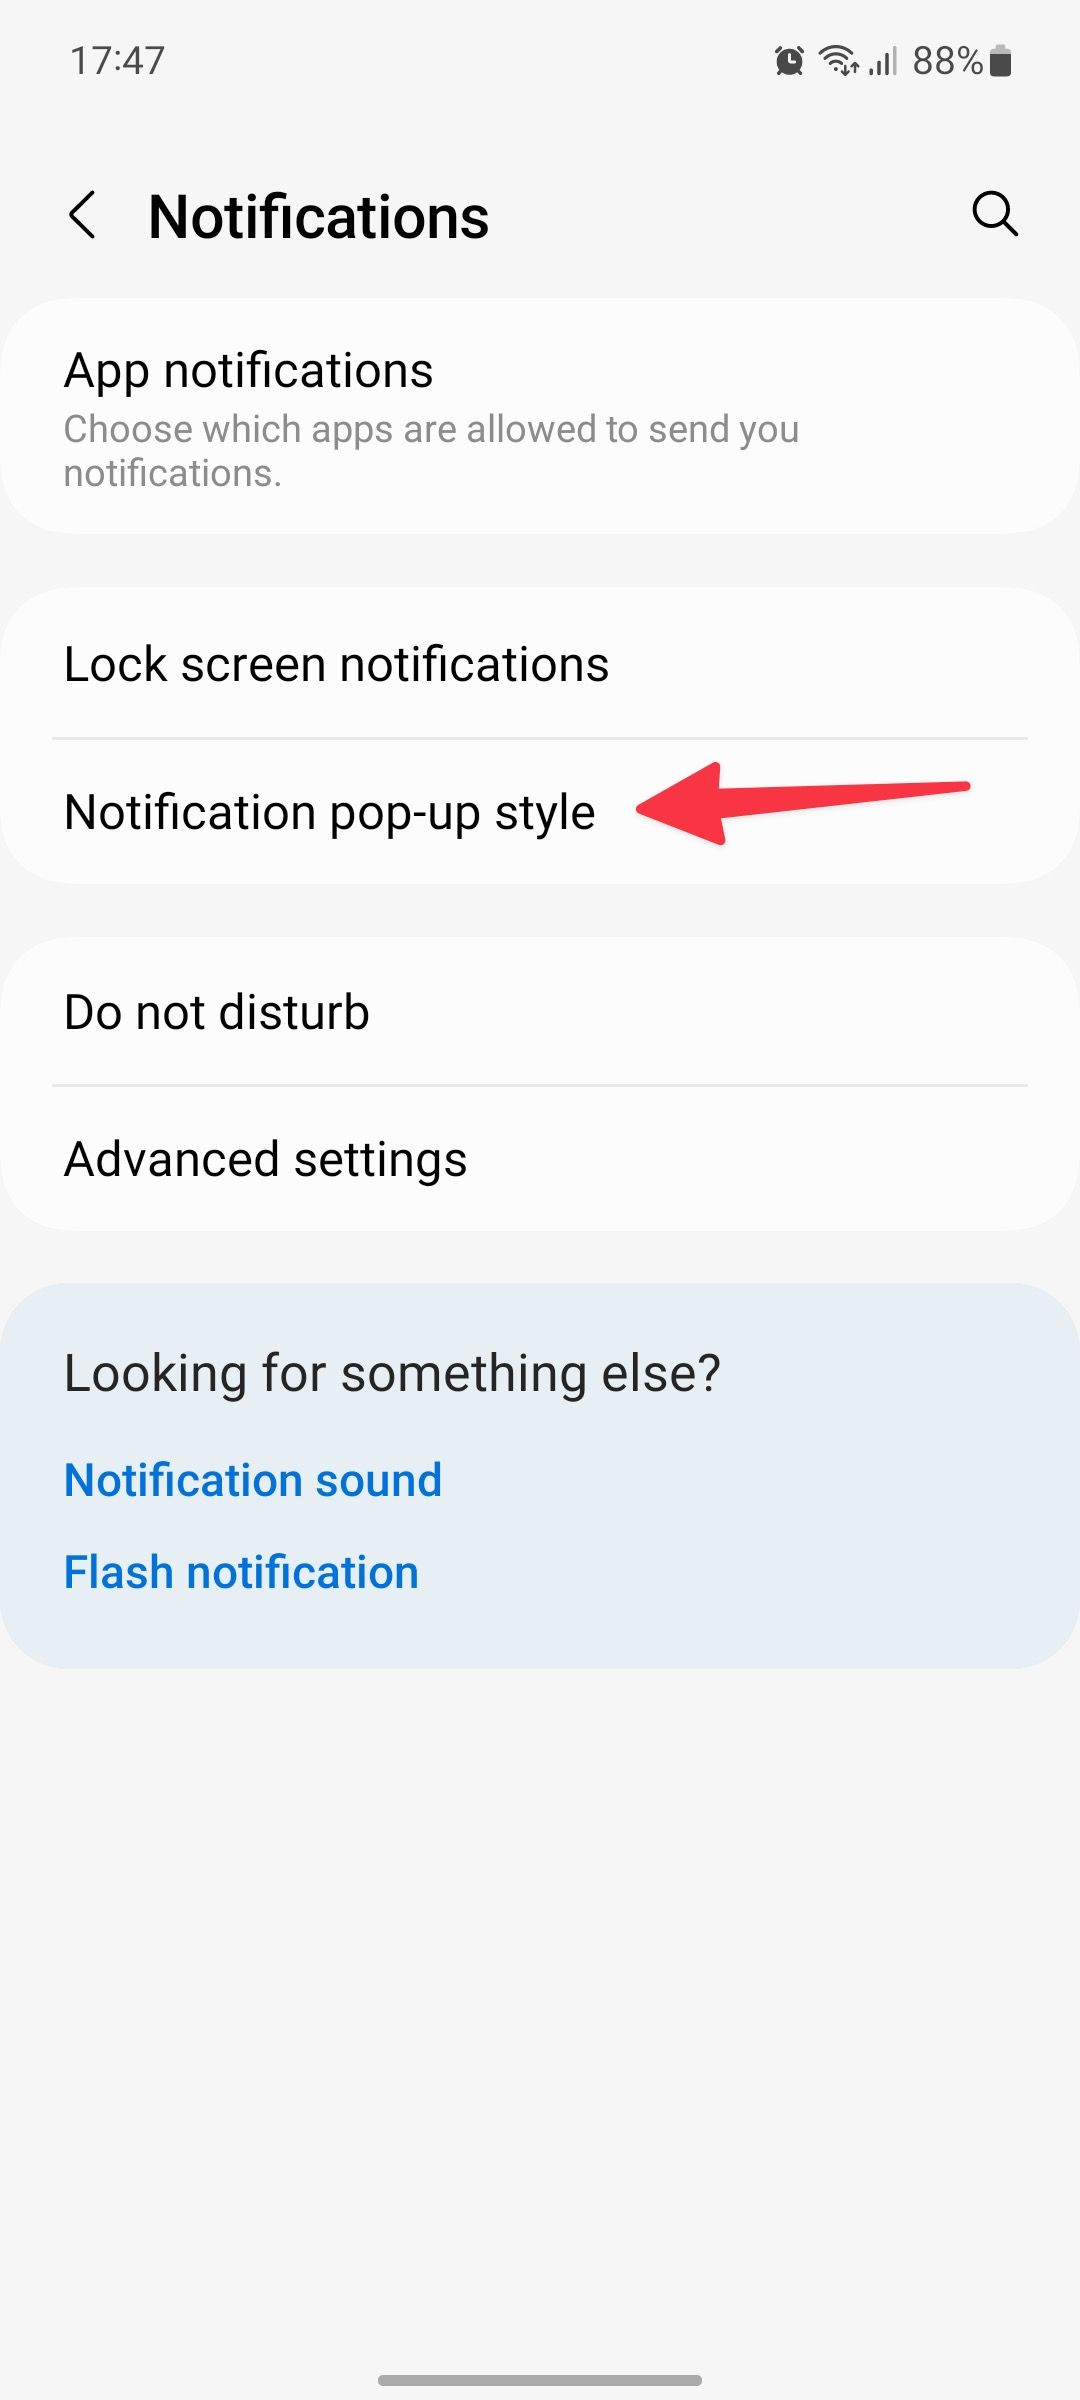 notification pop-up style